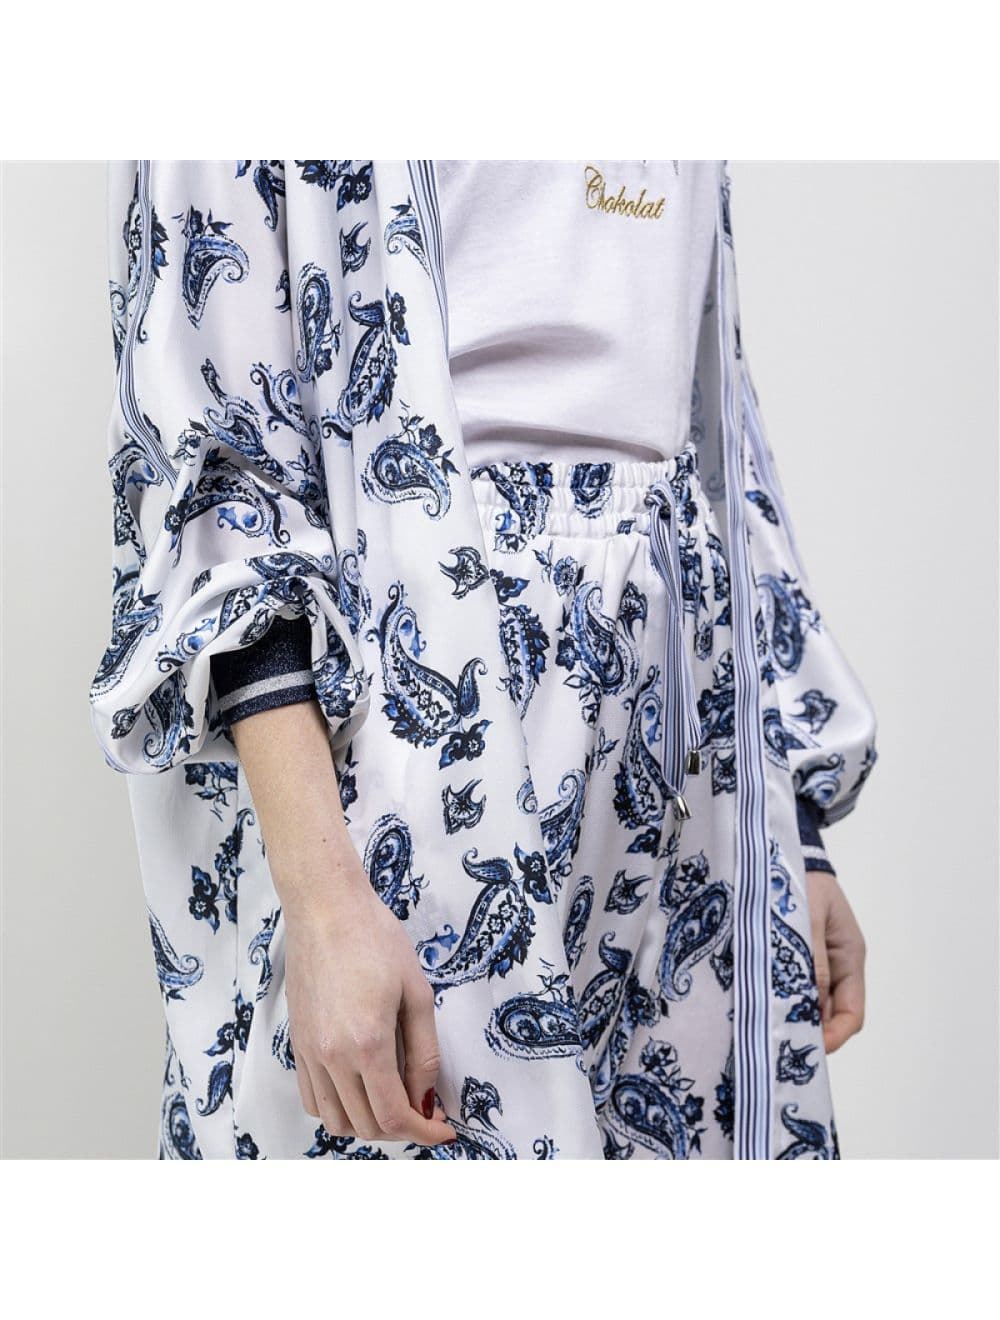 Kimono Chokolat fashion estampado fluido - Imagen 4